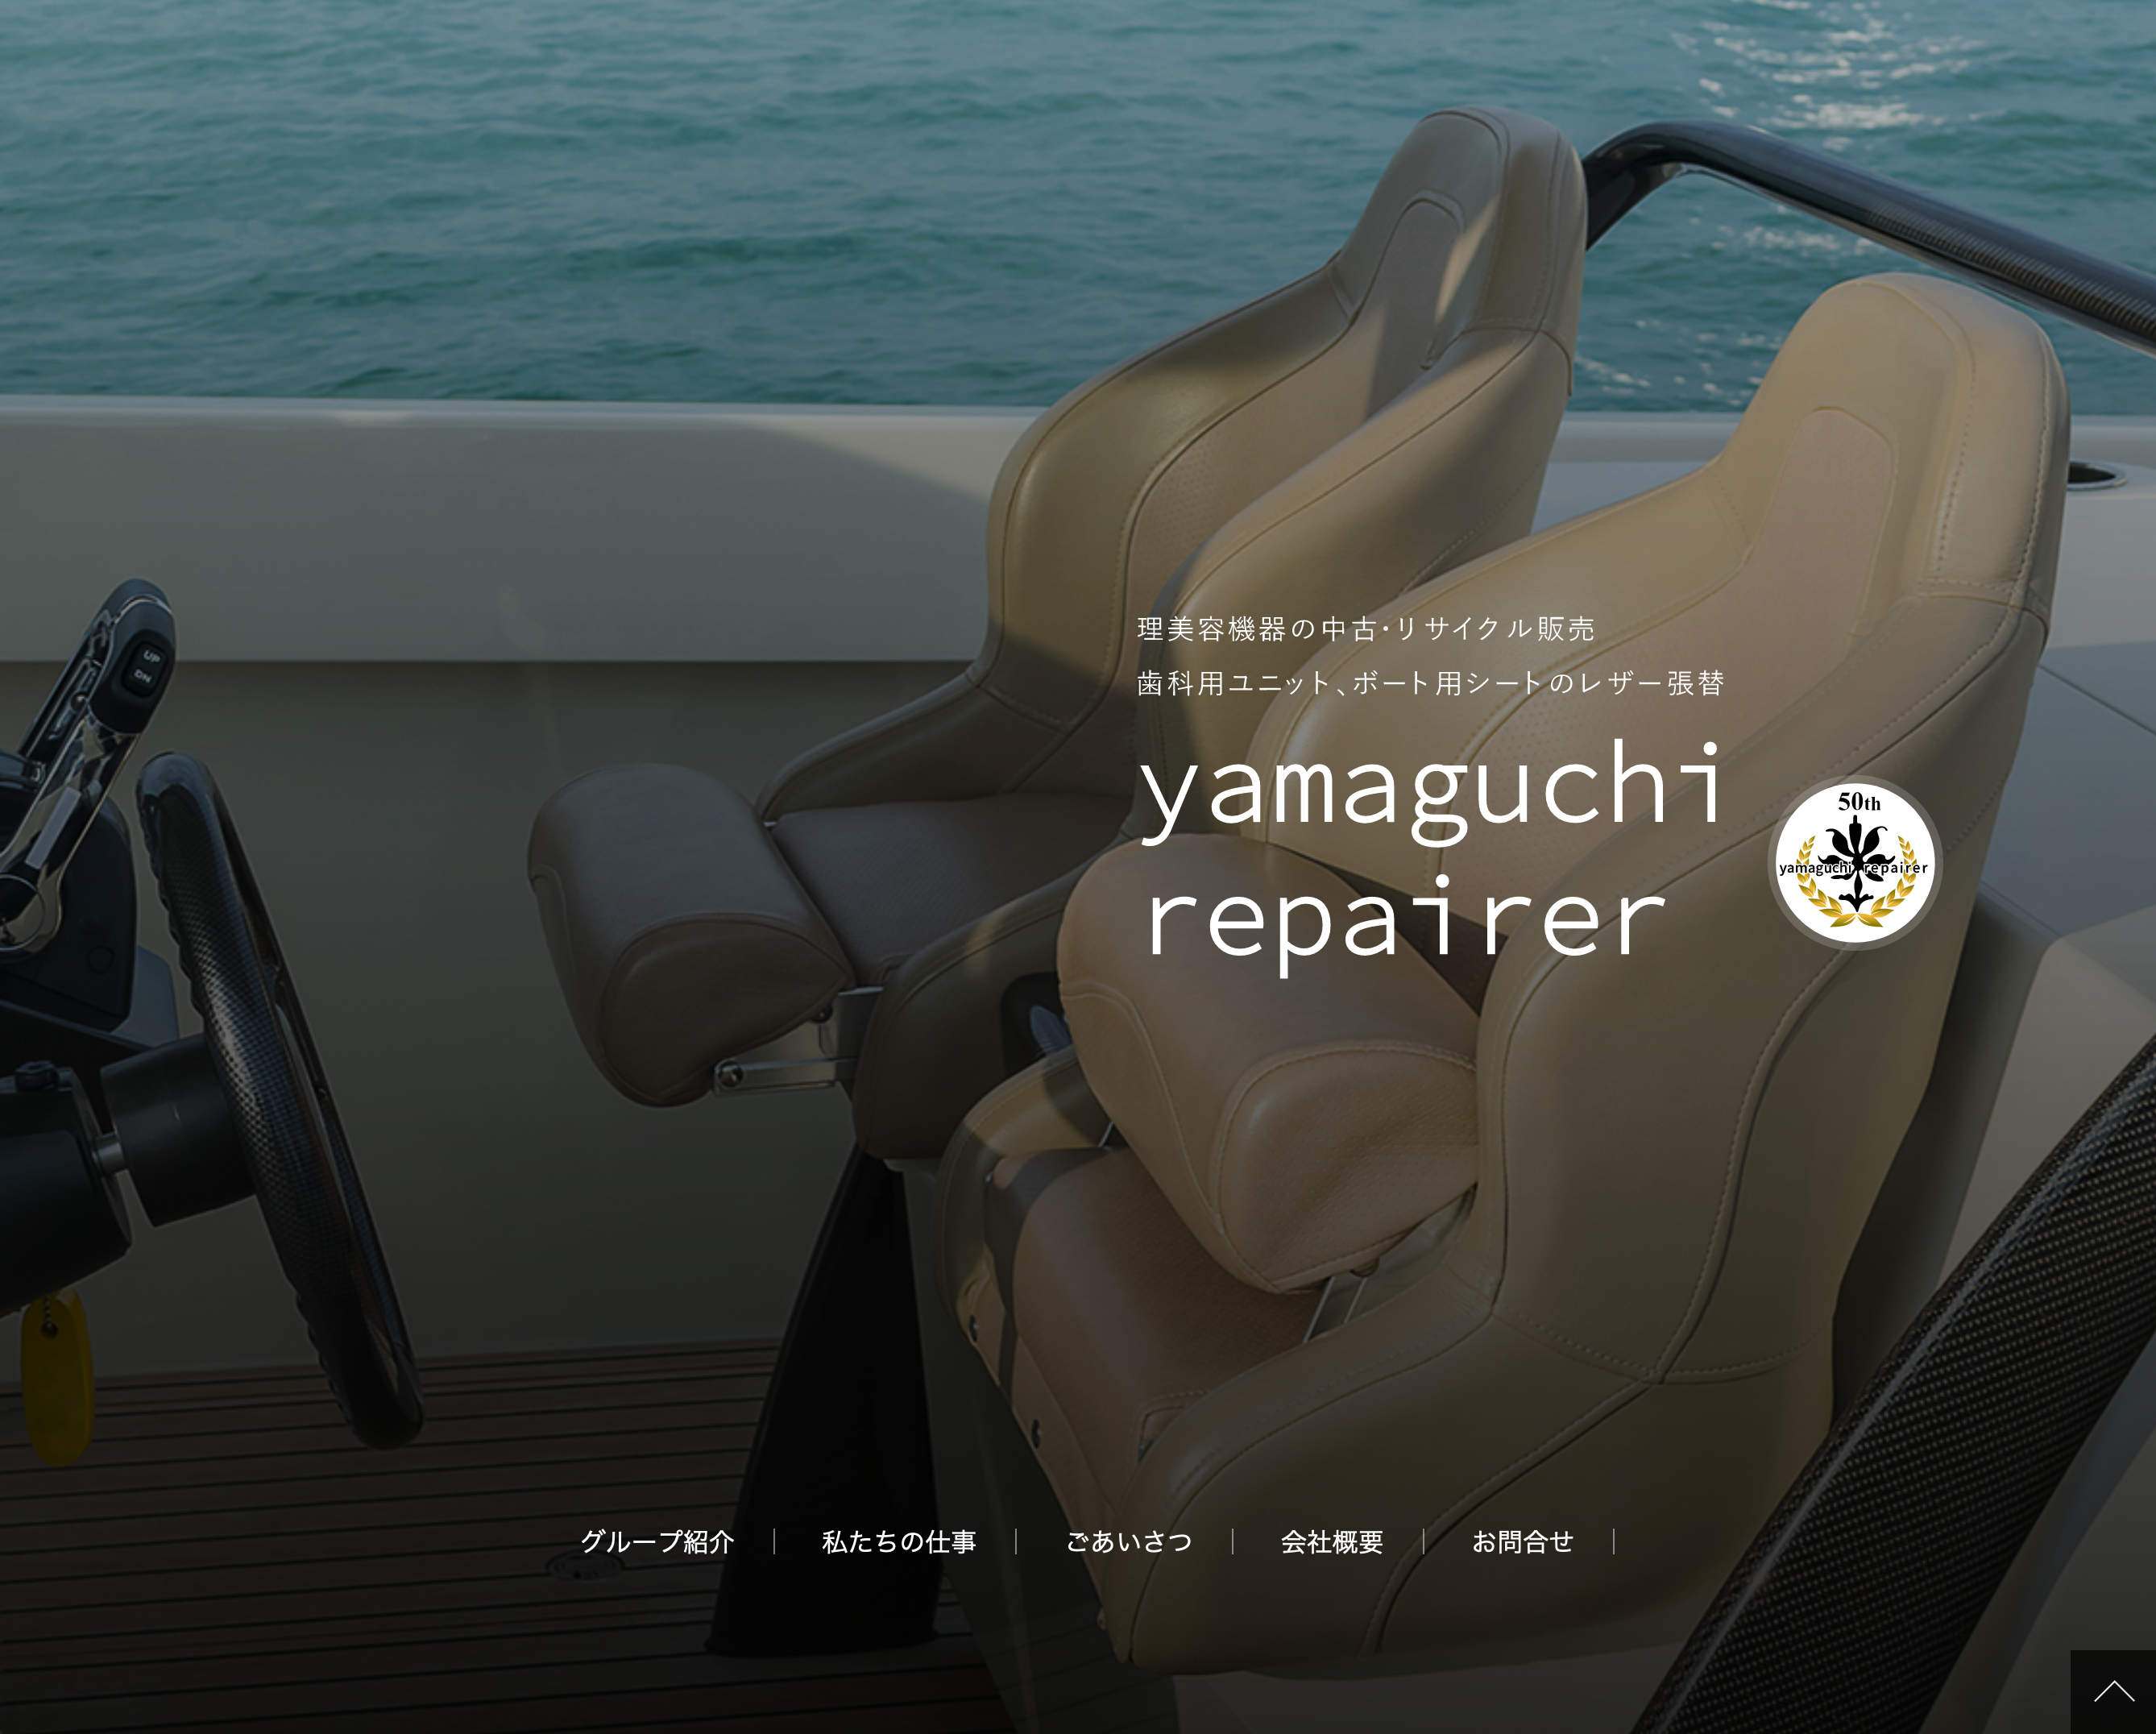 yamaguchi.png (5.31 MB)